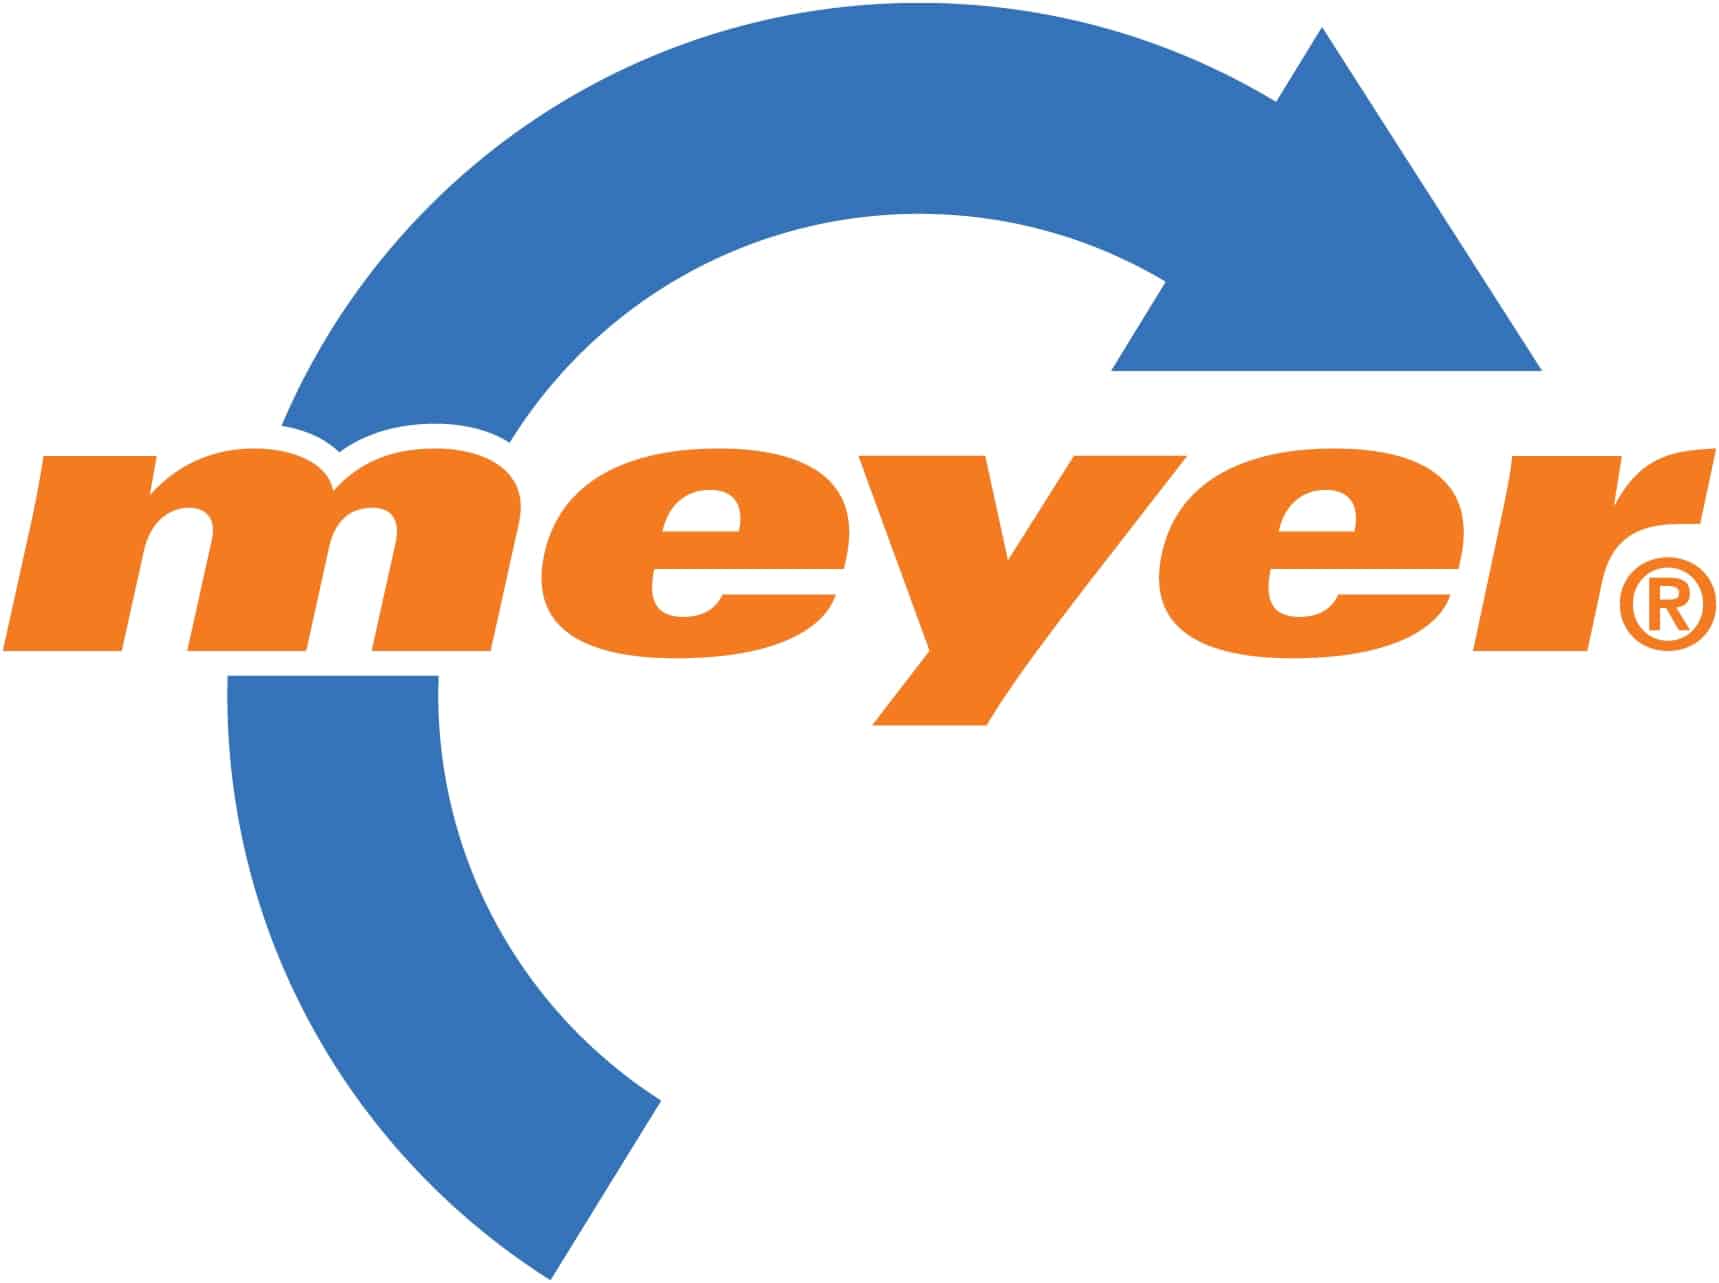 Meyer Distributing Company Logo